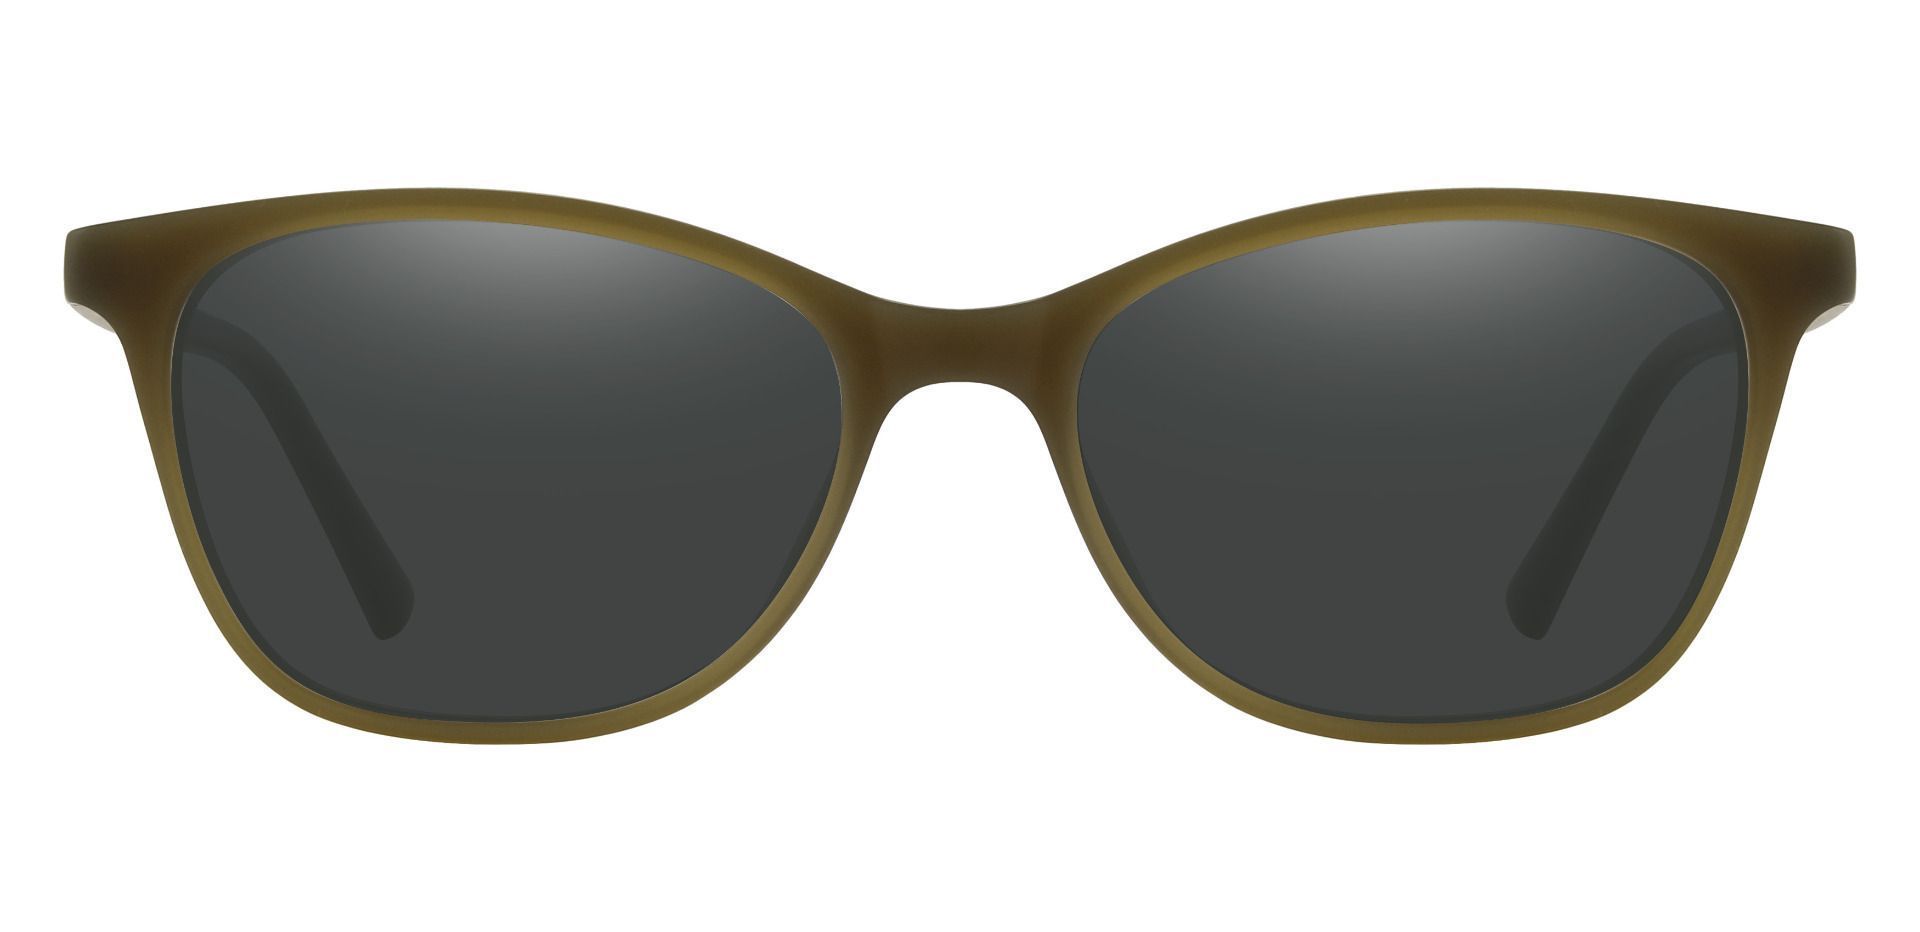 Sasha Classic Square Prescription Sunglasses - Green Frame With Gray Lenses